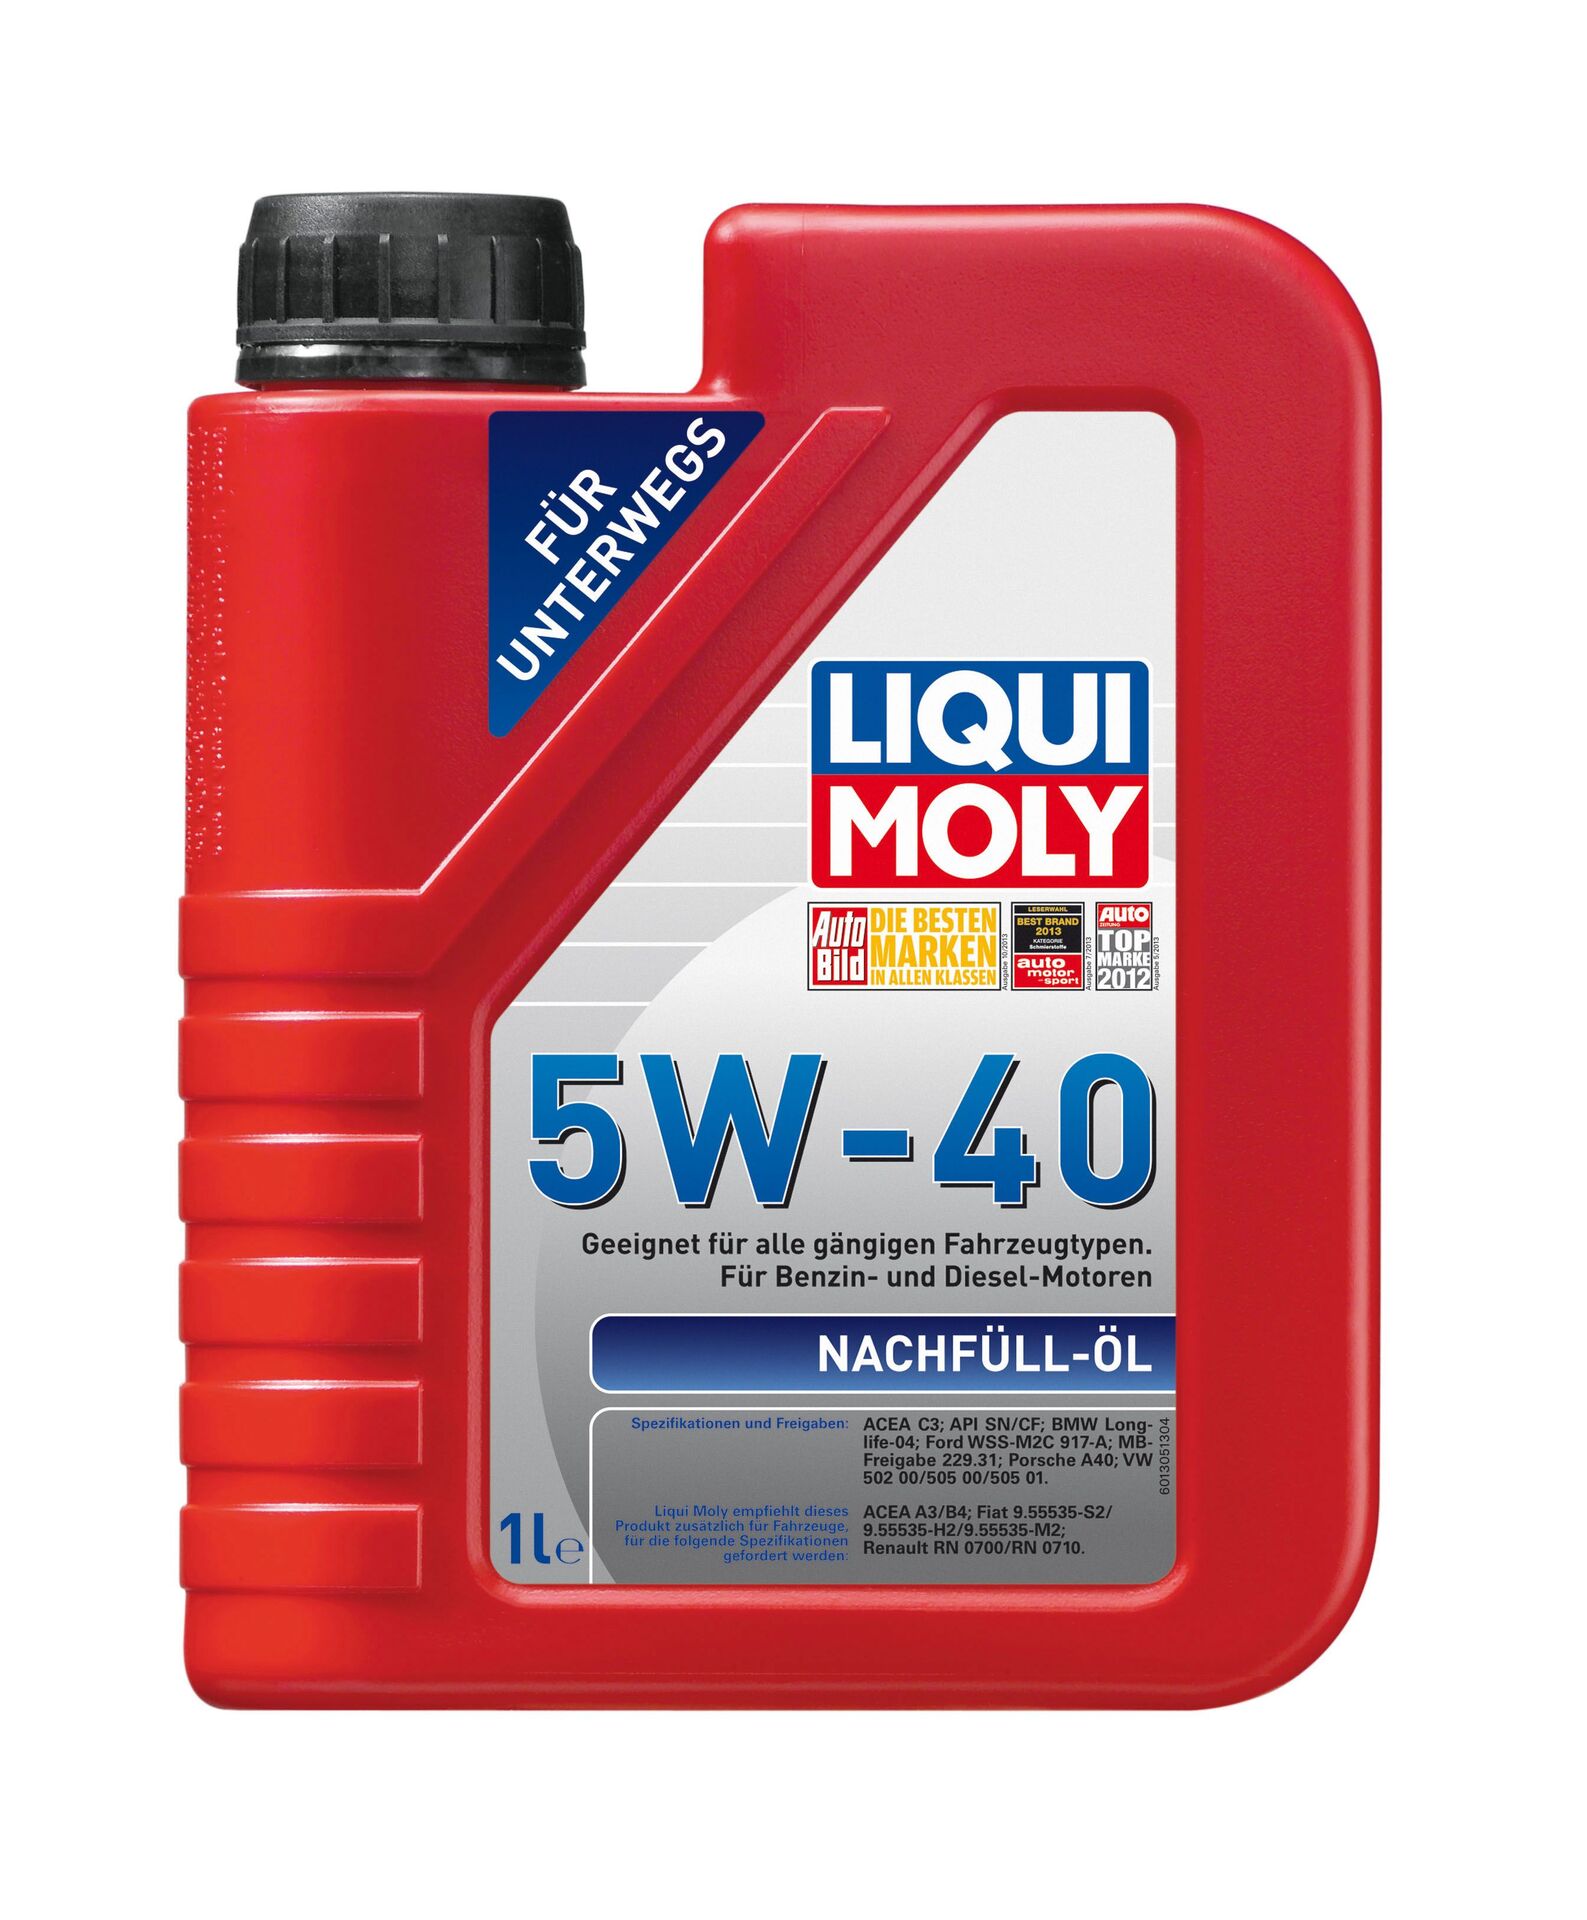 Liqui Moly Nachfüll Öl 5 W-40